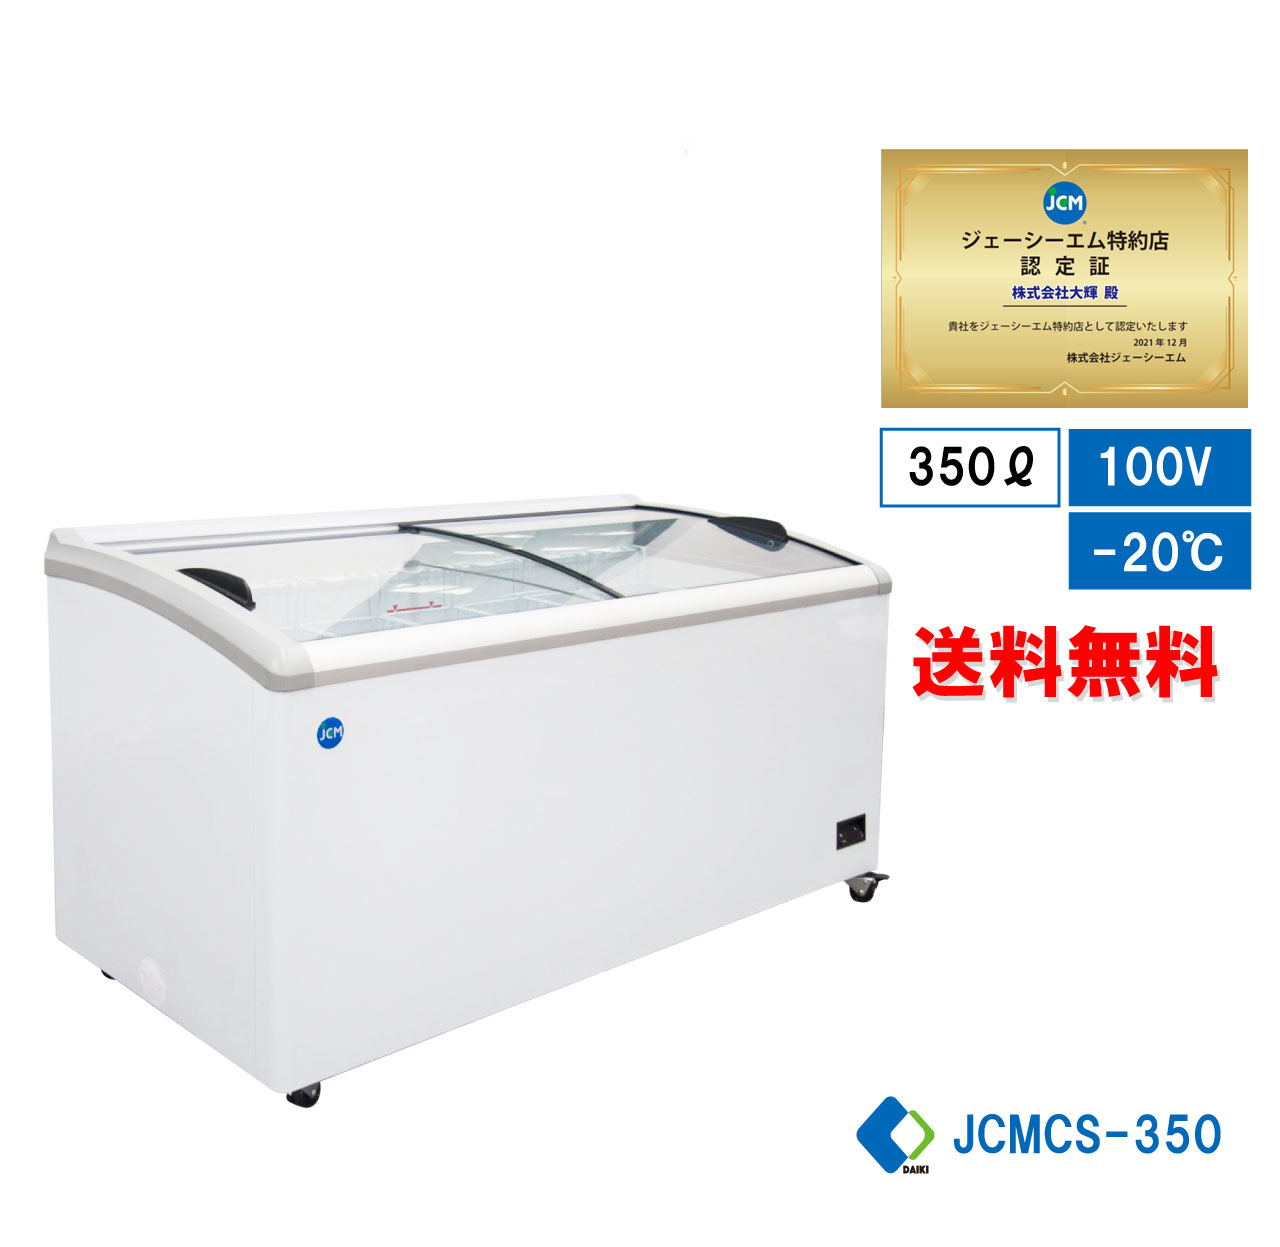 【楽天市場】【JCMCS-330】 業務用 JCM 冷凍ショーケース 産業用 